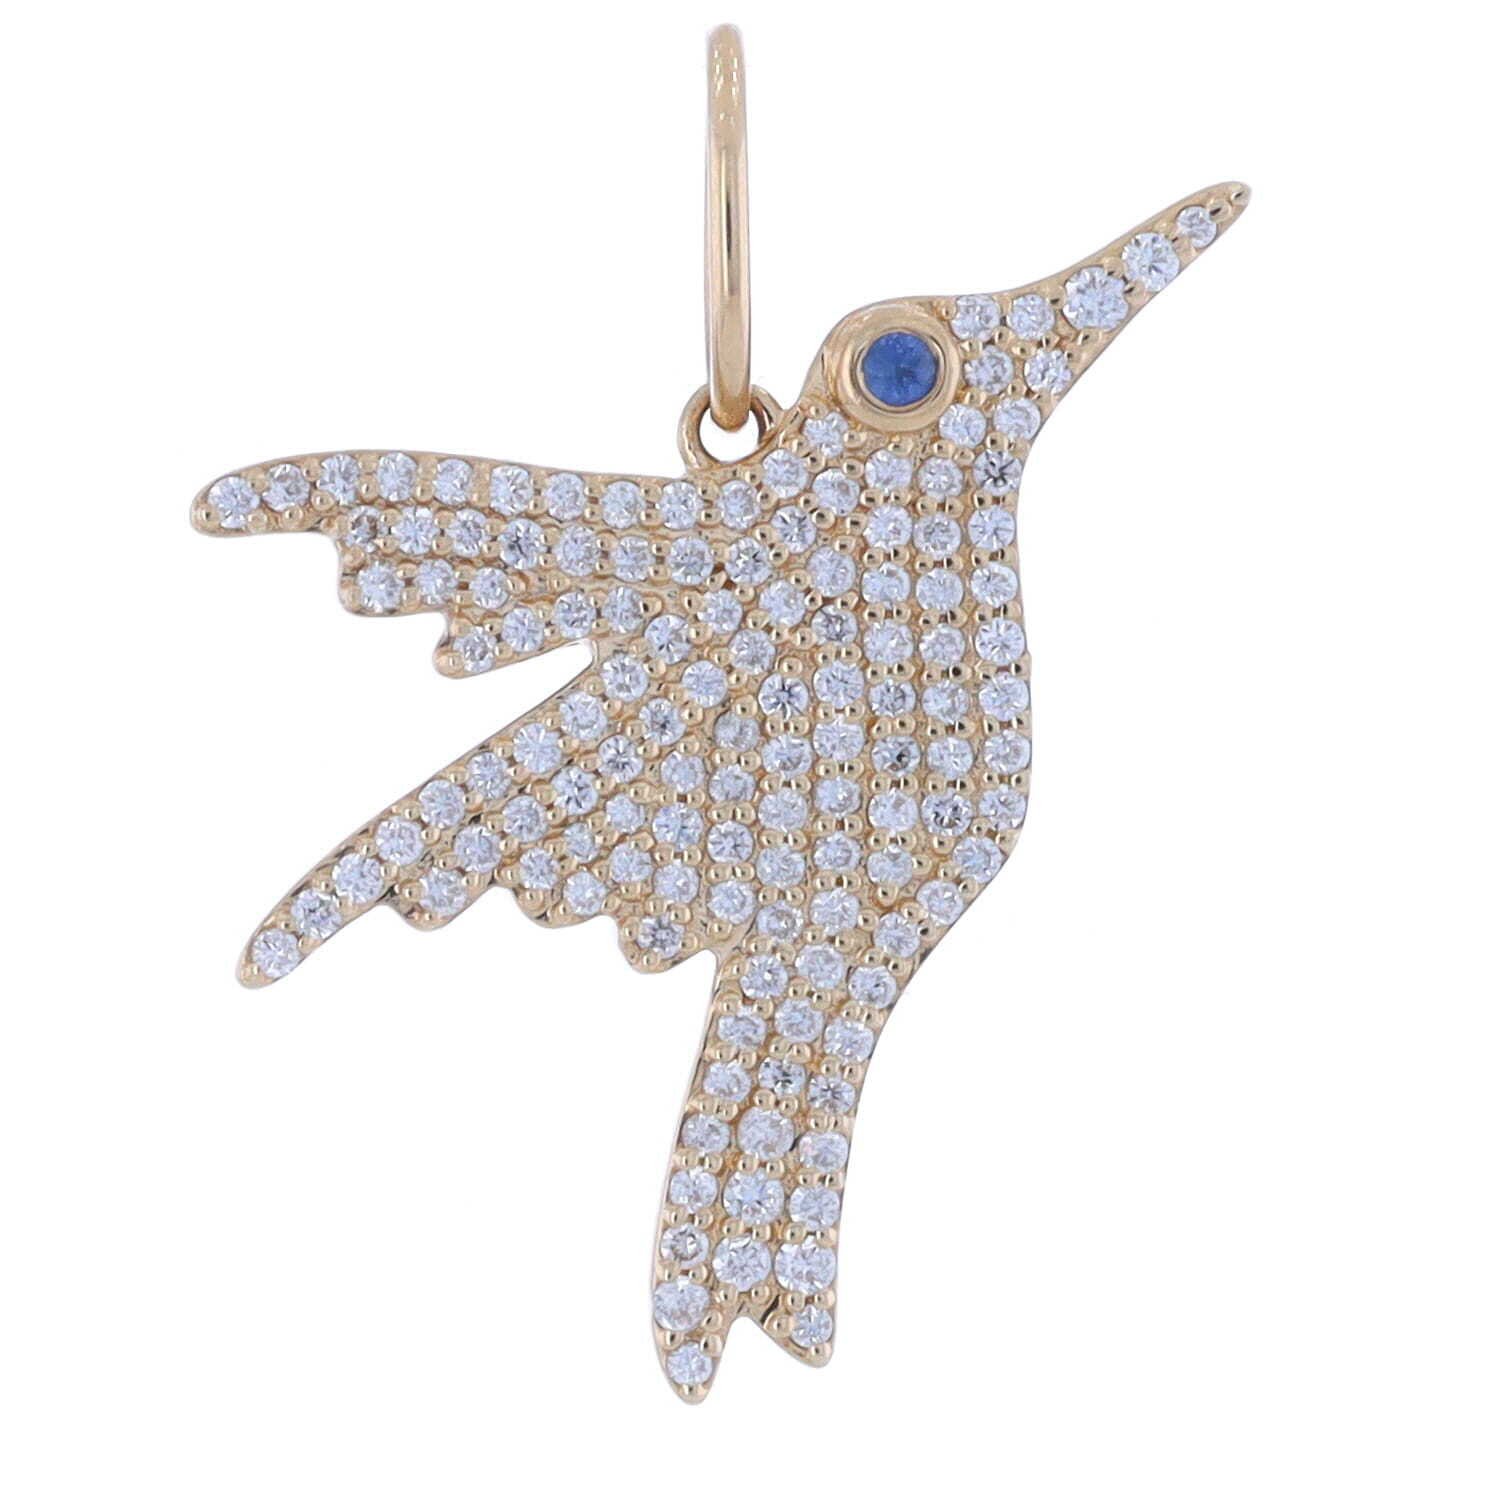 14k yellow Gold Pave Diamond Swallow Charm Pendant with Sapphire Eye